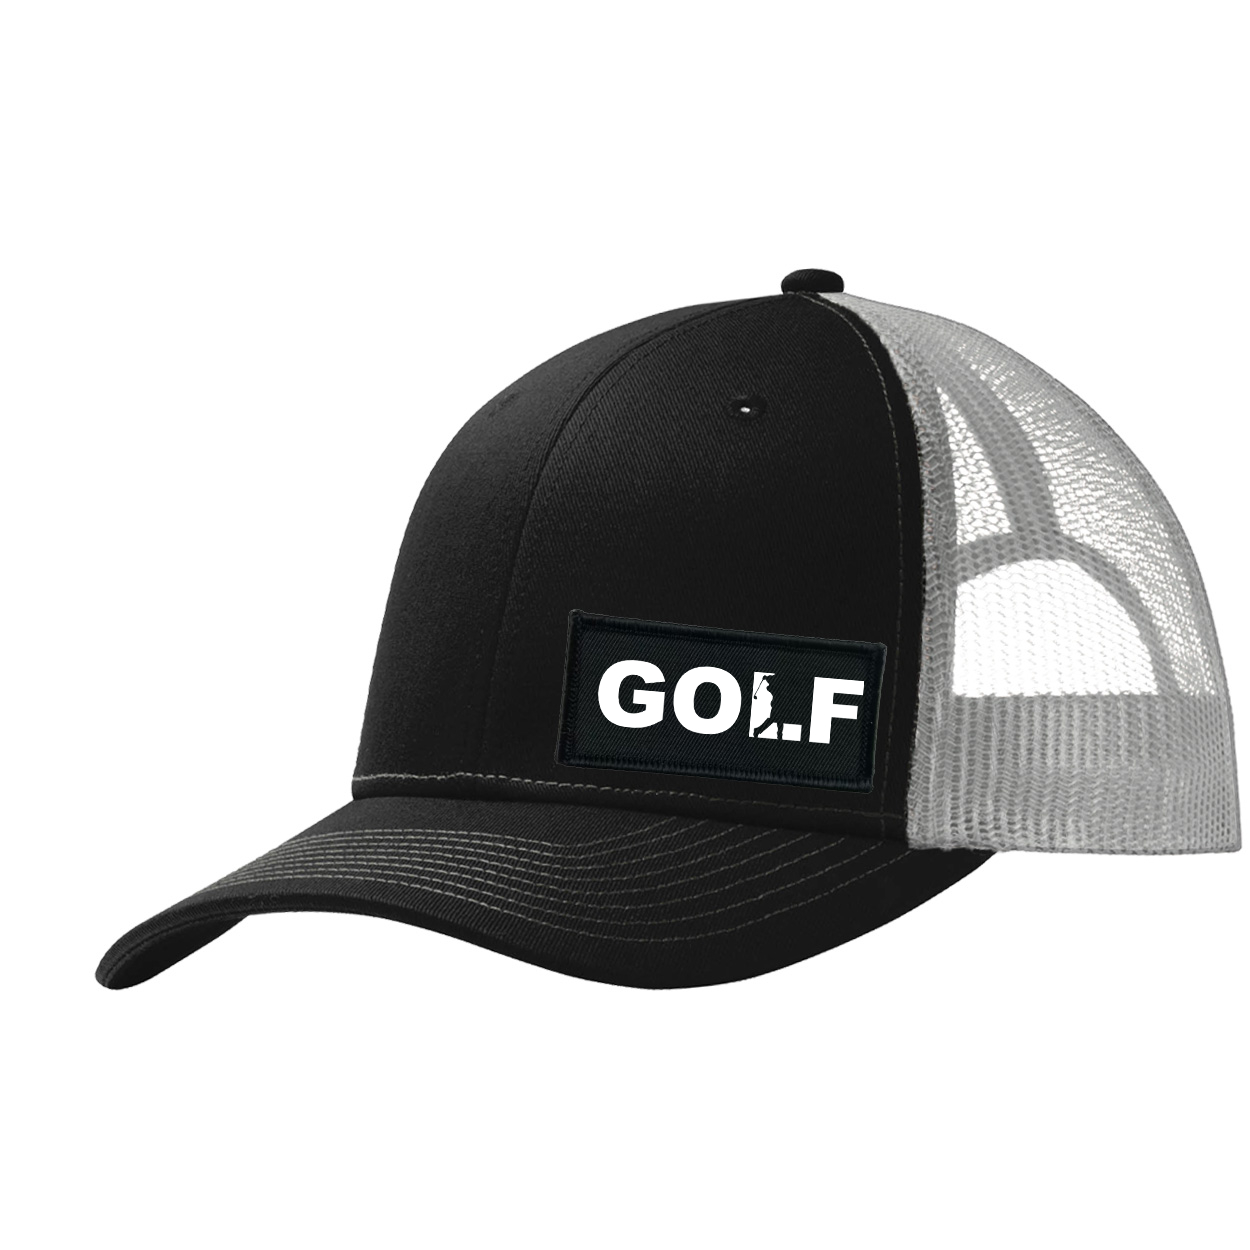 Golf Swing Logo Night Out Woven Patch Snapback Trucker Hat Black/Gray 